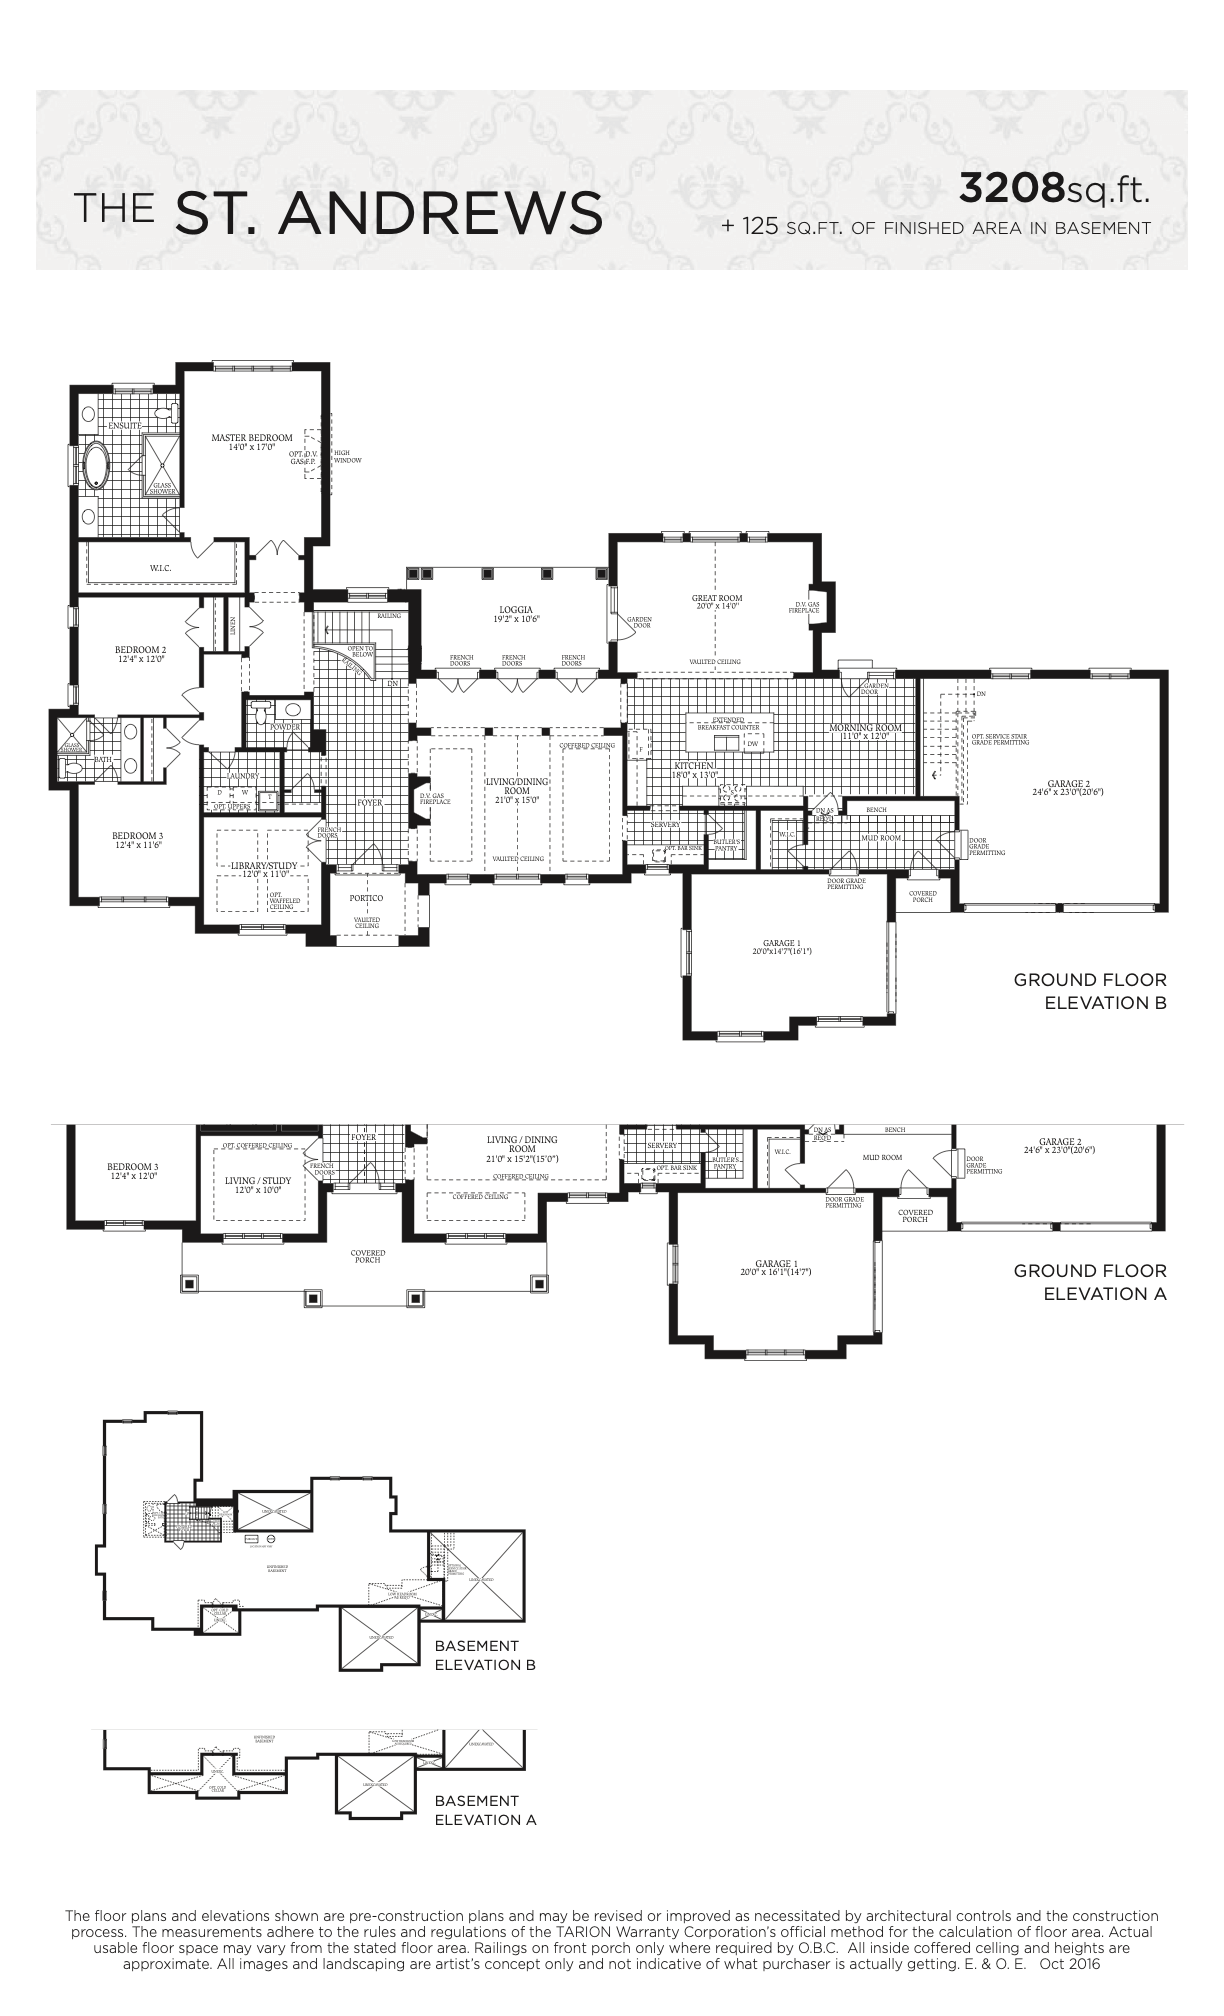 The St. Andrews floorplan